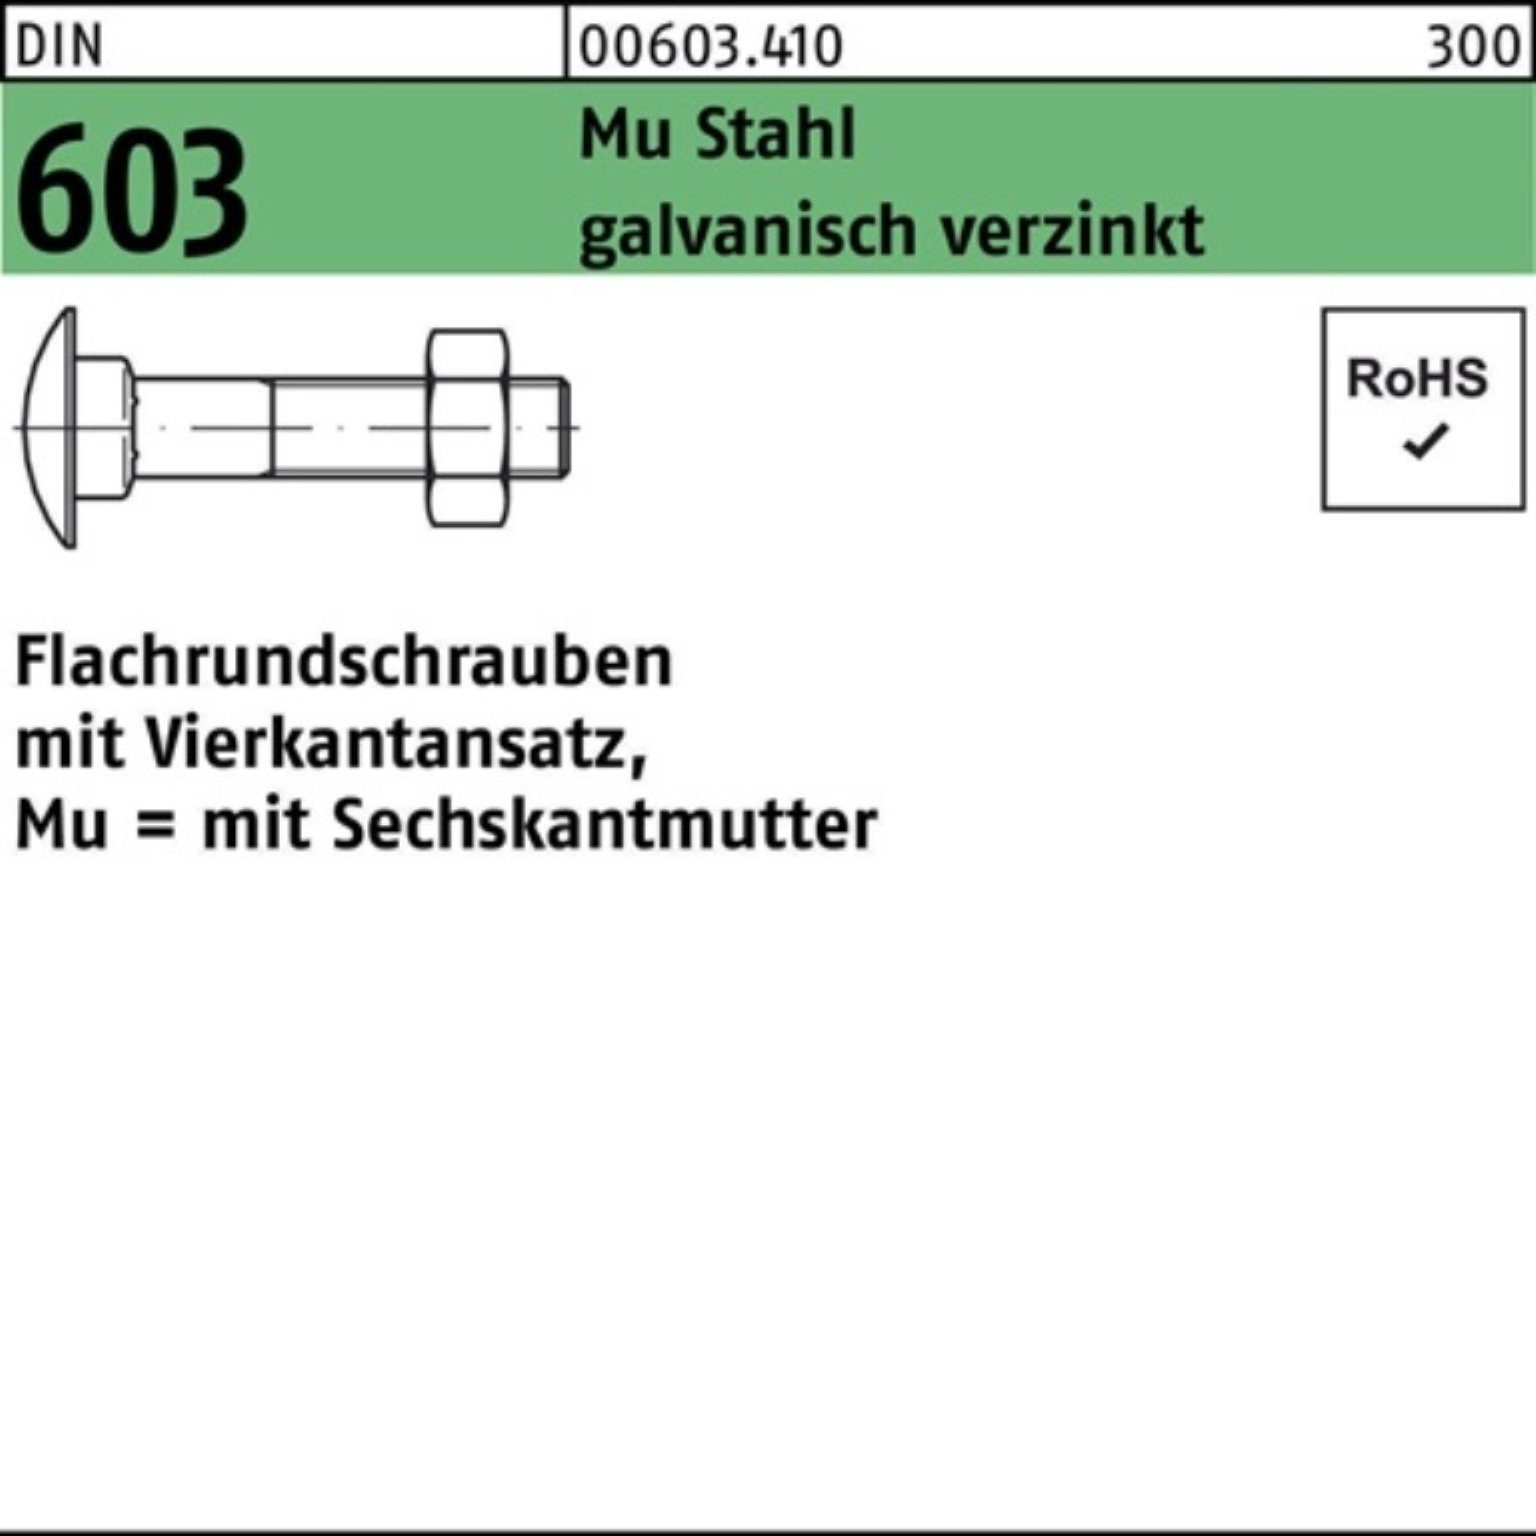 Vierkantansatz/6-ktmutter M12x300 603 DIN 100er Pack Reyher Schraube Flachrundschraube